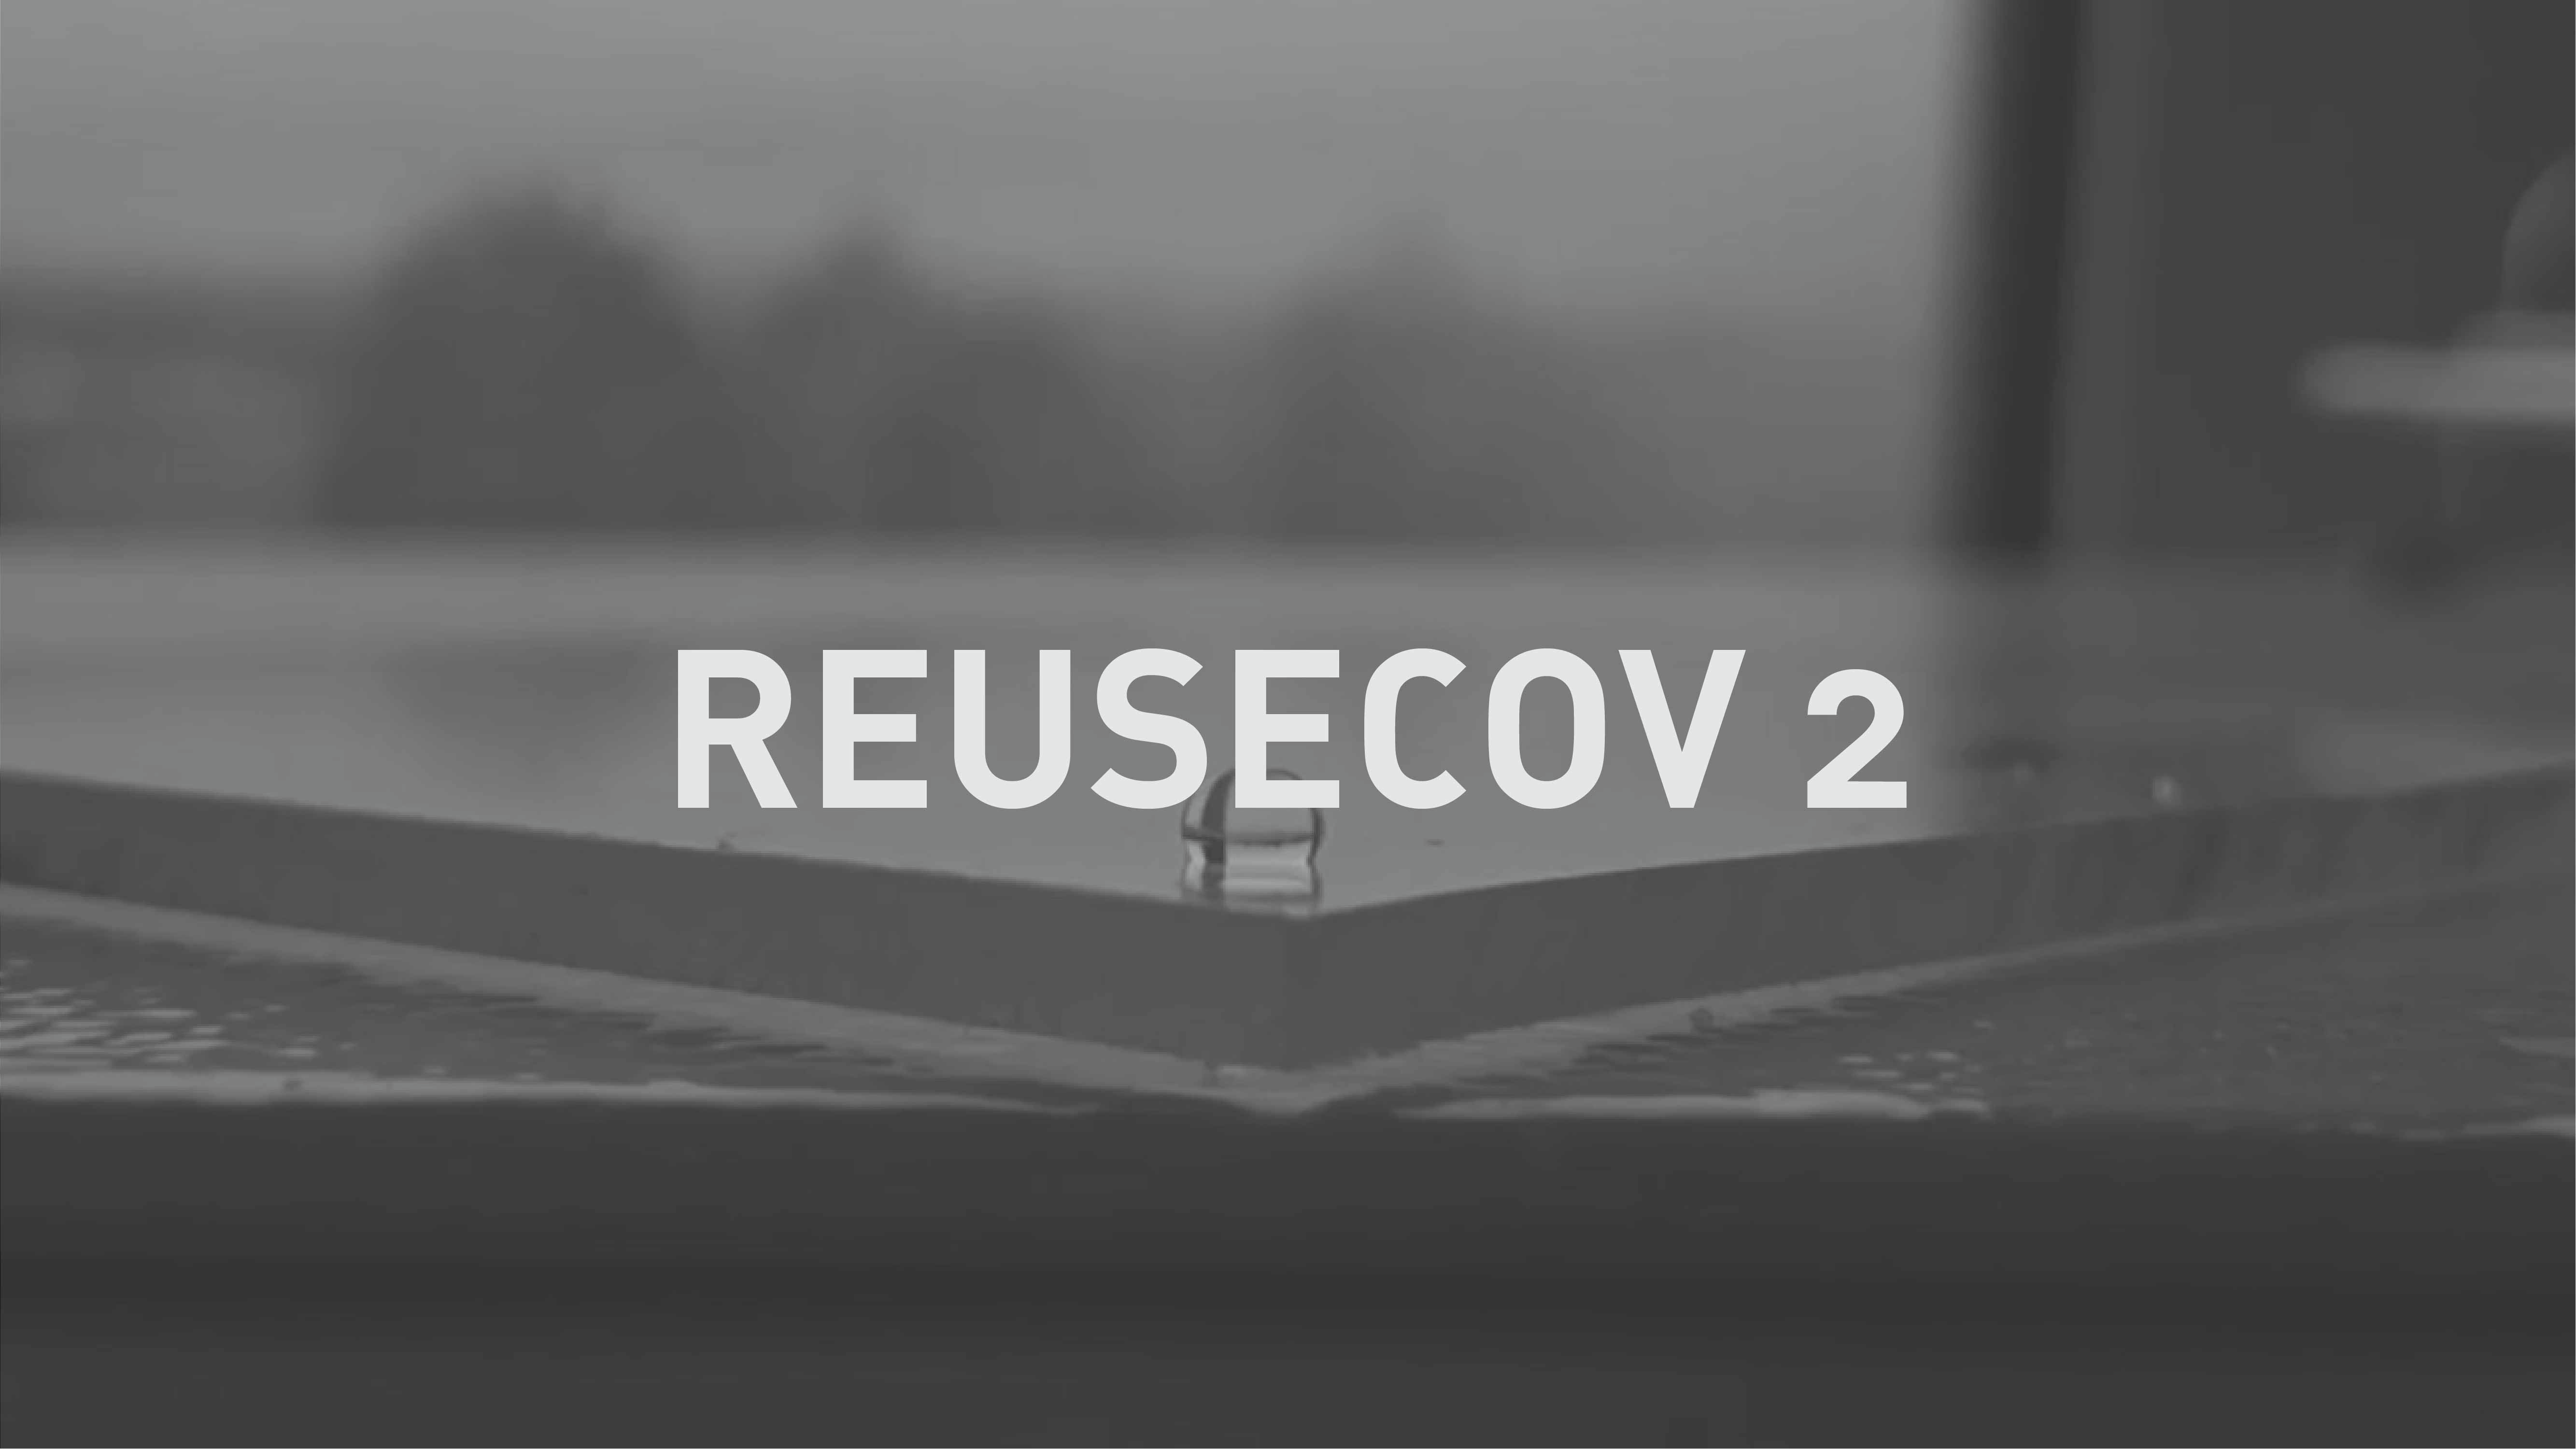 REUSECOV 2